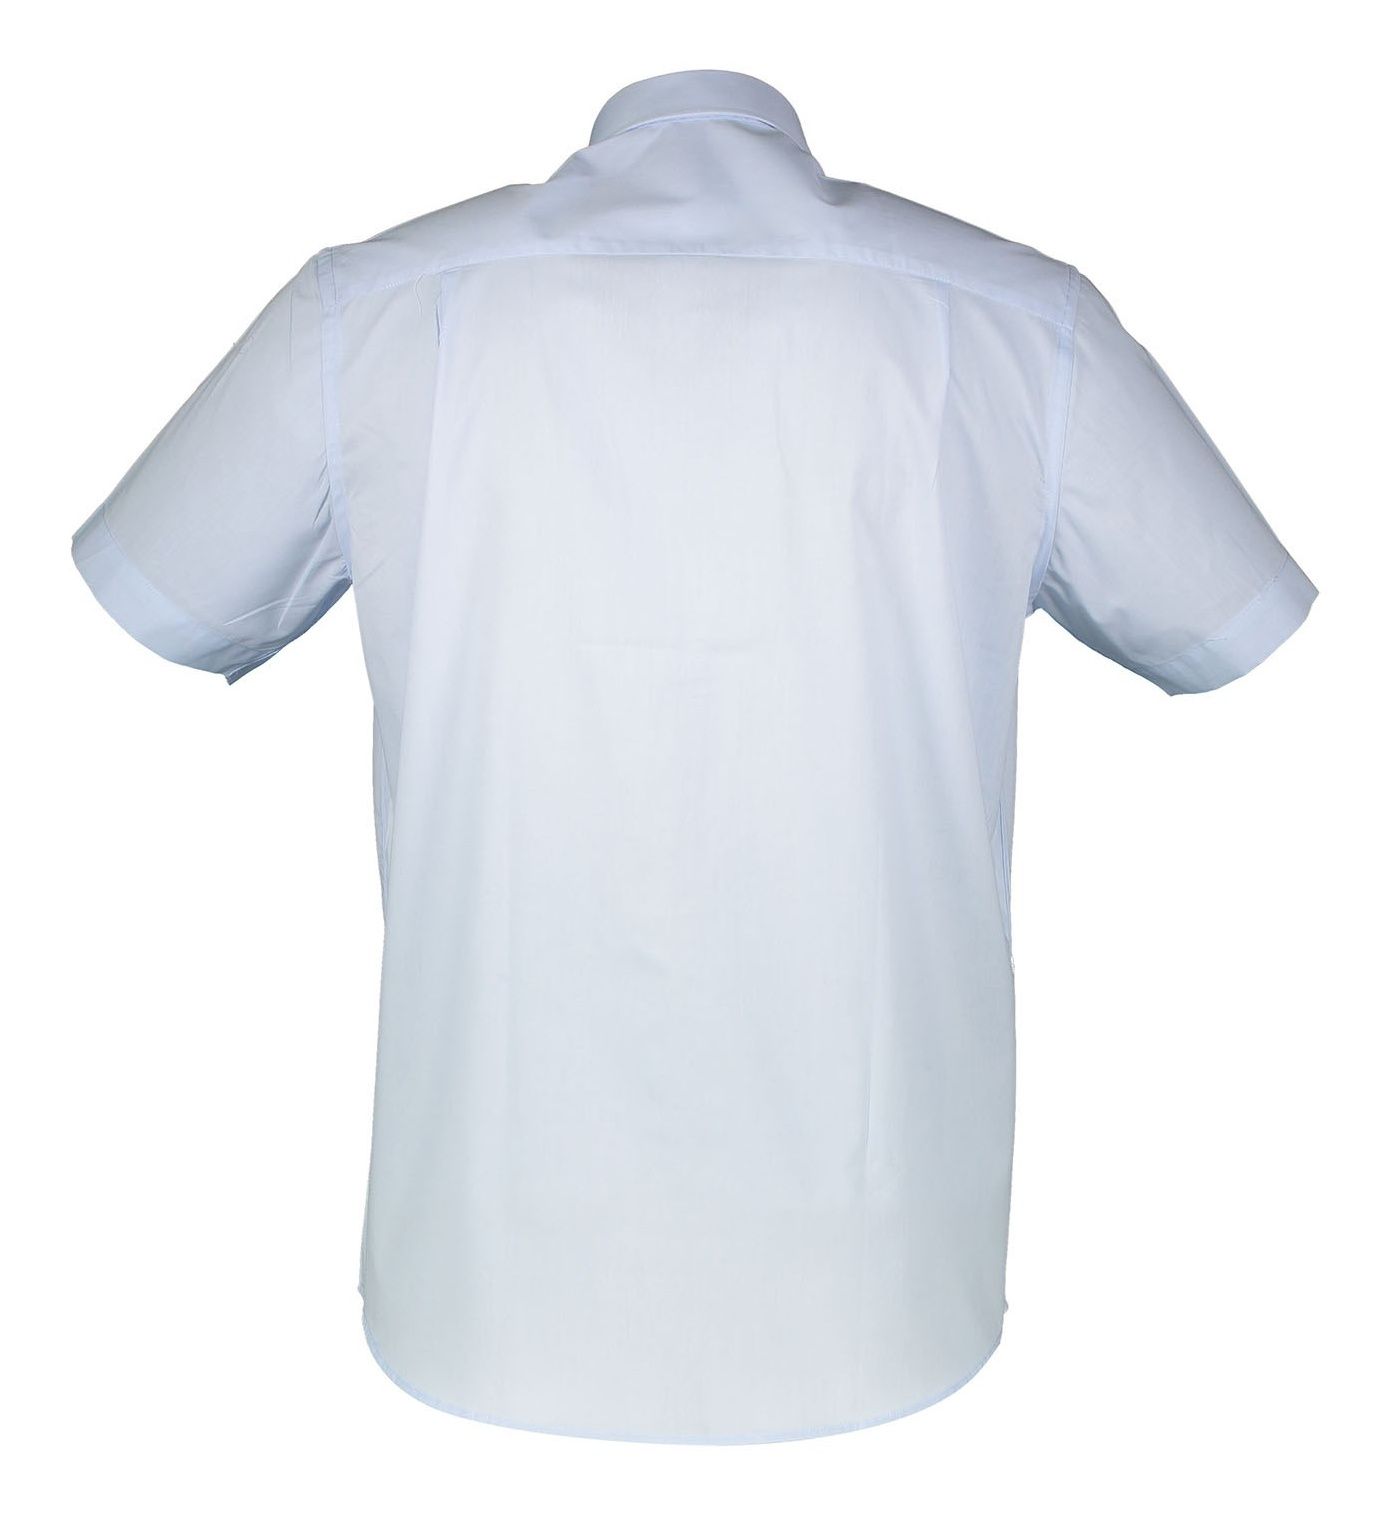 پیراهن آستین کوتاه مردانه - یوپیم - آبي - 3